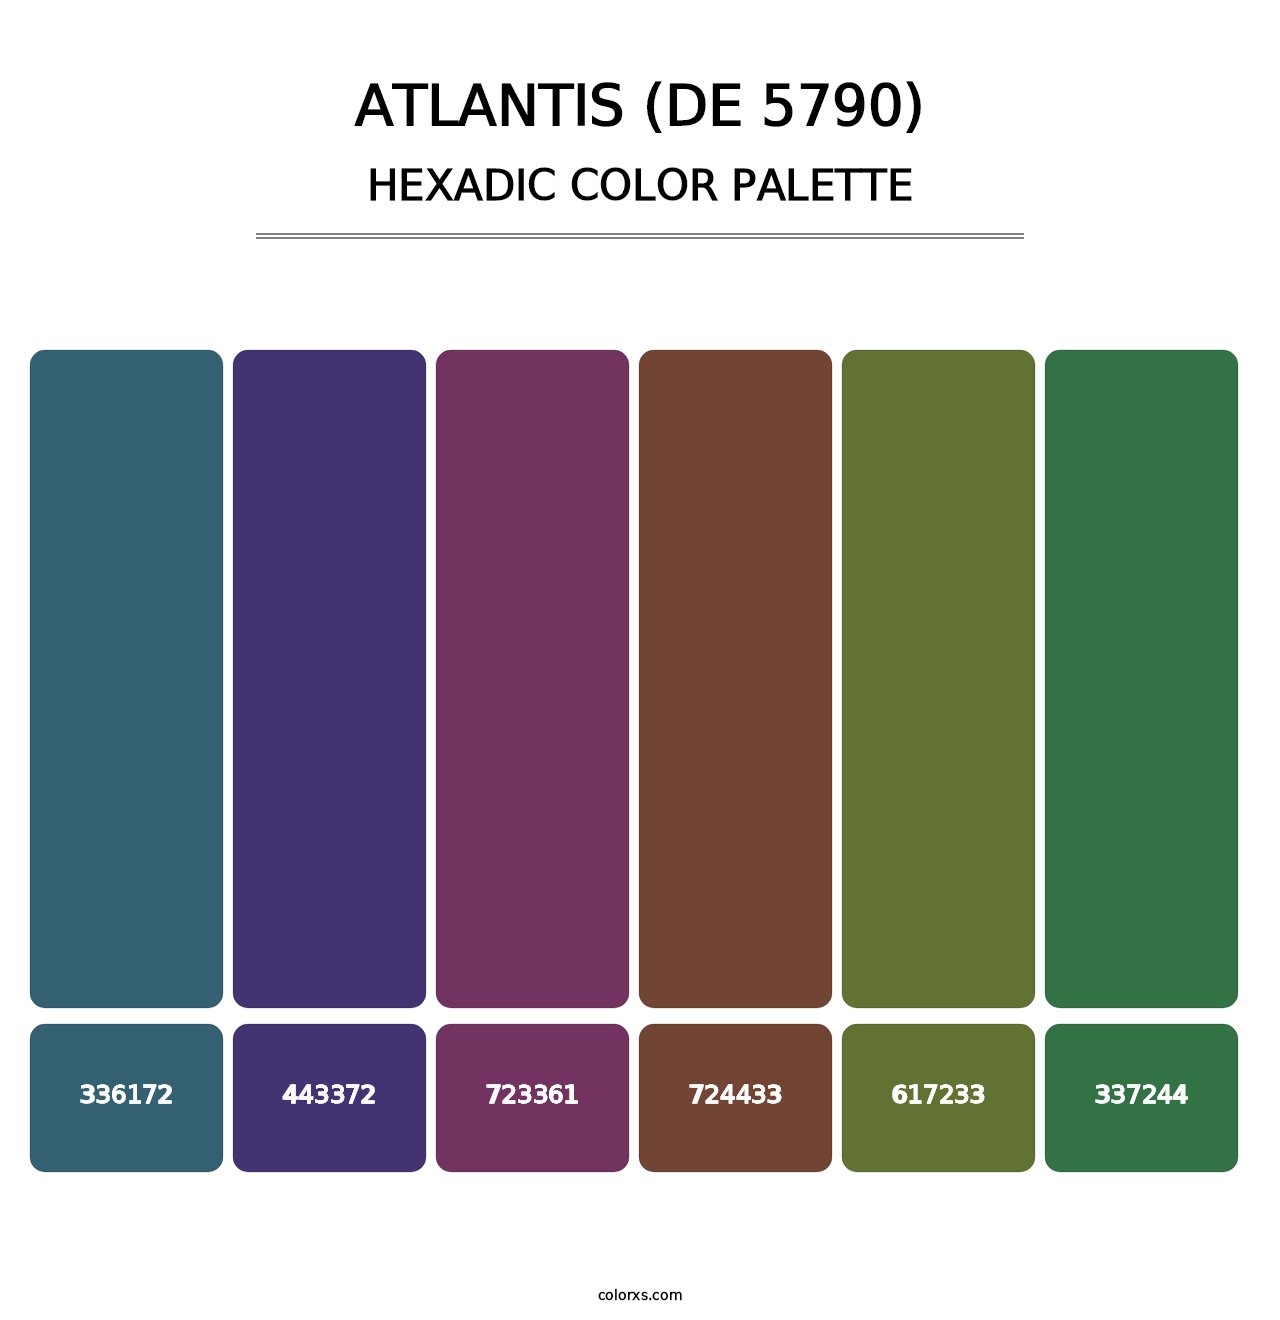 Atlantis (DE 5790) - Hexadic Color Palette